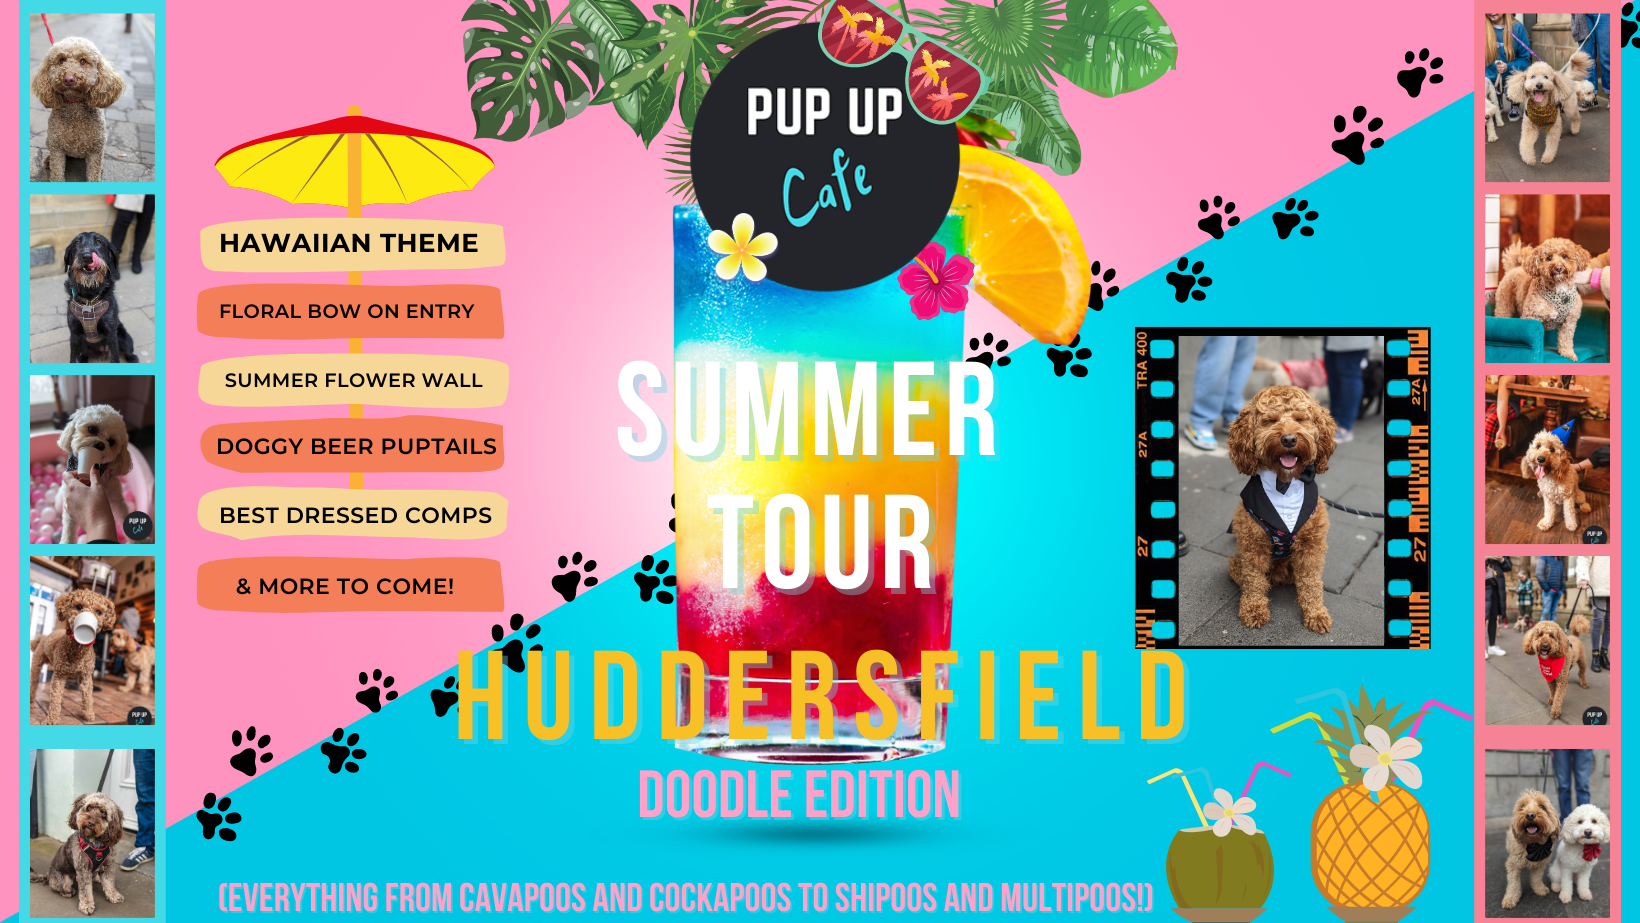 Doodle Pup Up Cafe – Huddersfield | SUMMER TOUR! 🌞